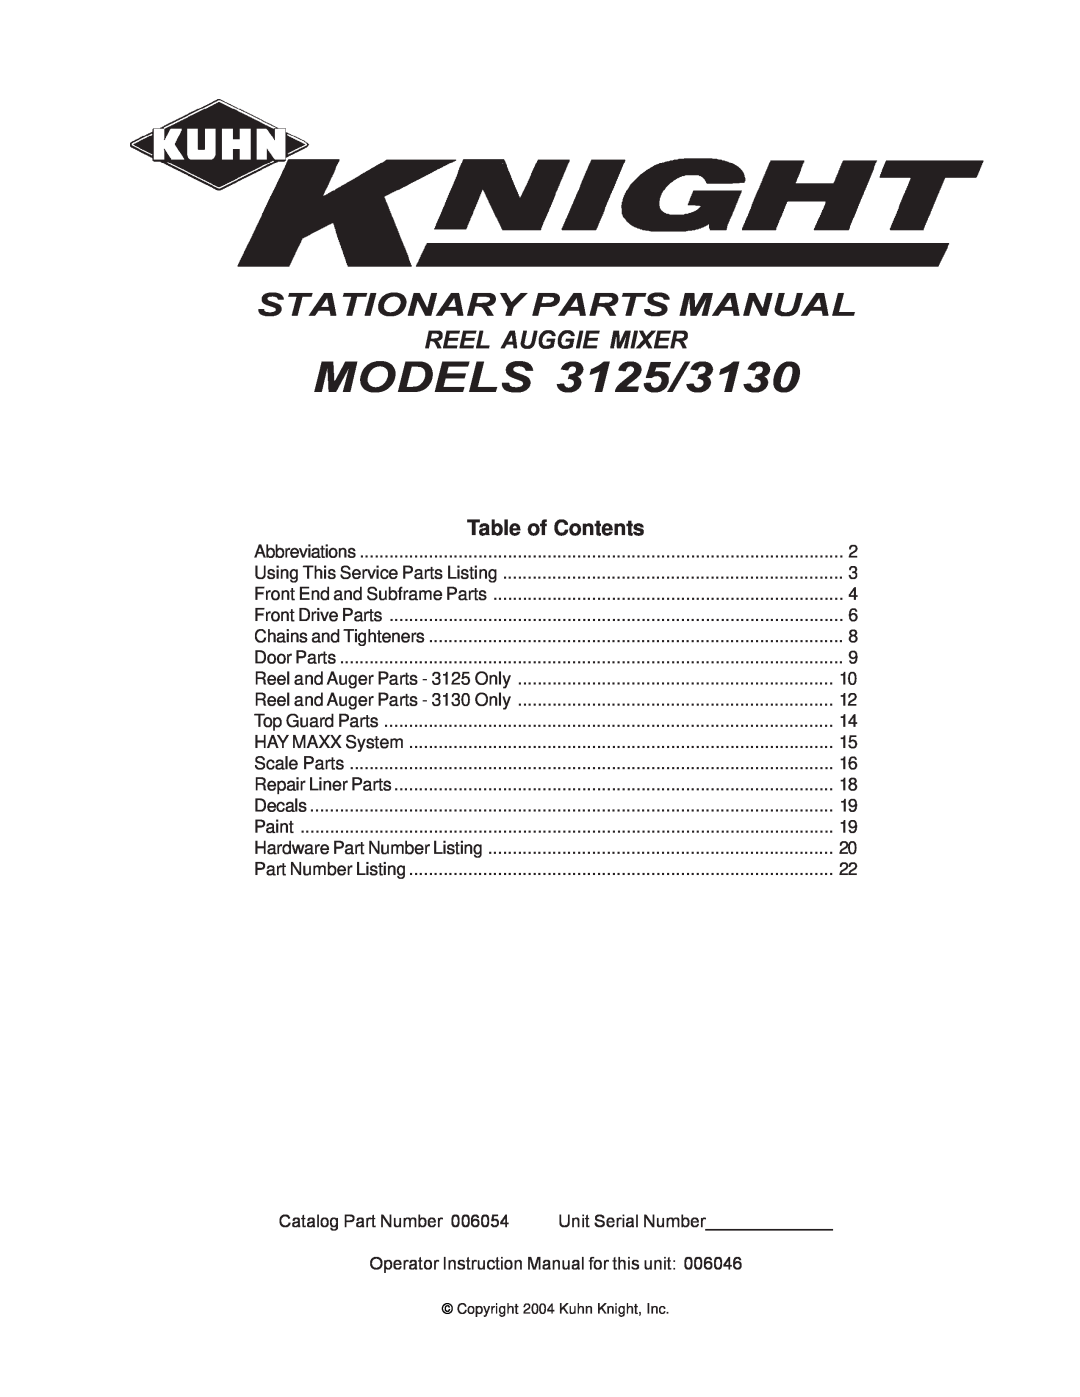 Kuhn Rikon instruction manual Table of Contents, MODELS 3125/3130, Stationary Parts Manual, Reel Auggie Mixer 